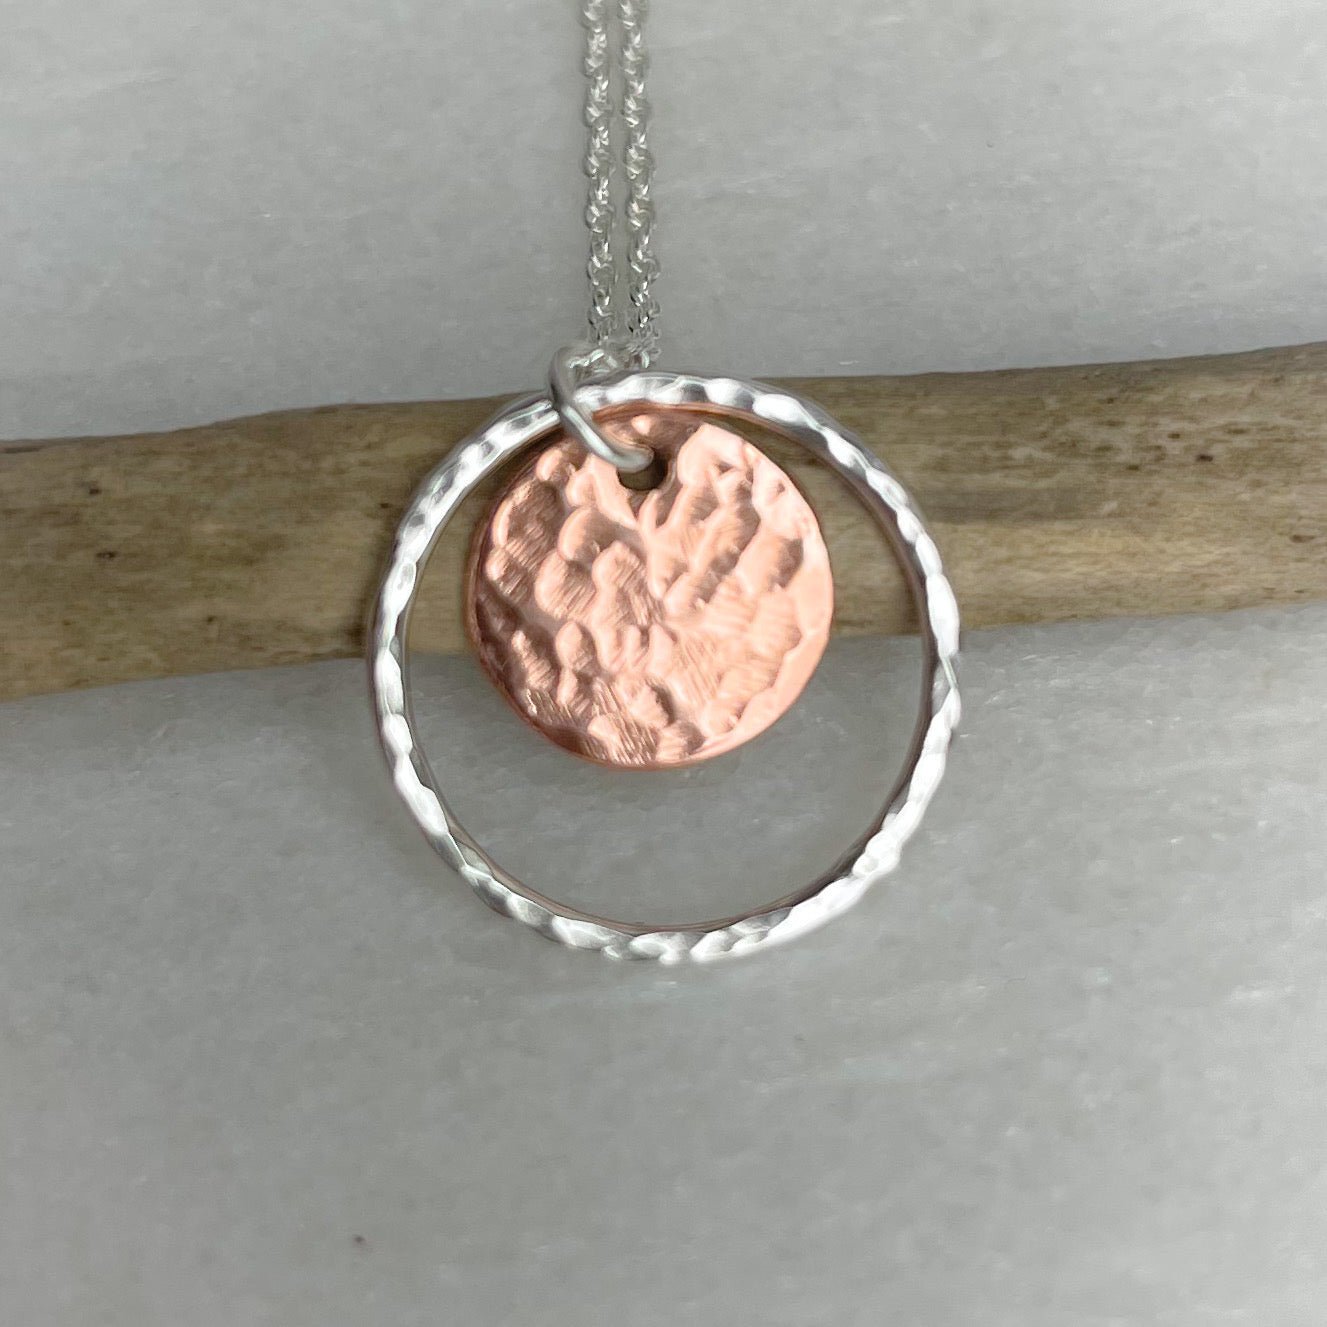 Copper Disc Necklace - The Nancy Smillie Shop - Art, Jewellery & Designer Gifts Glasgow